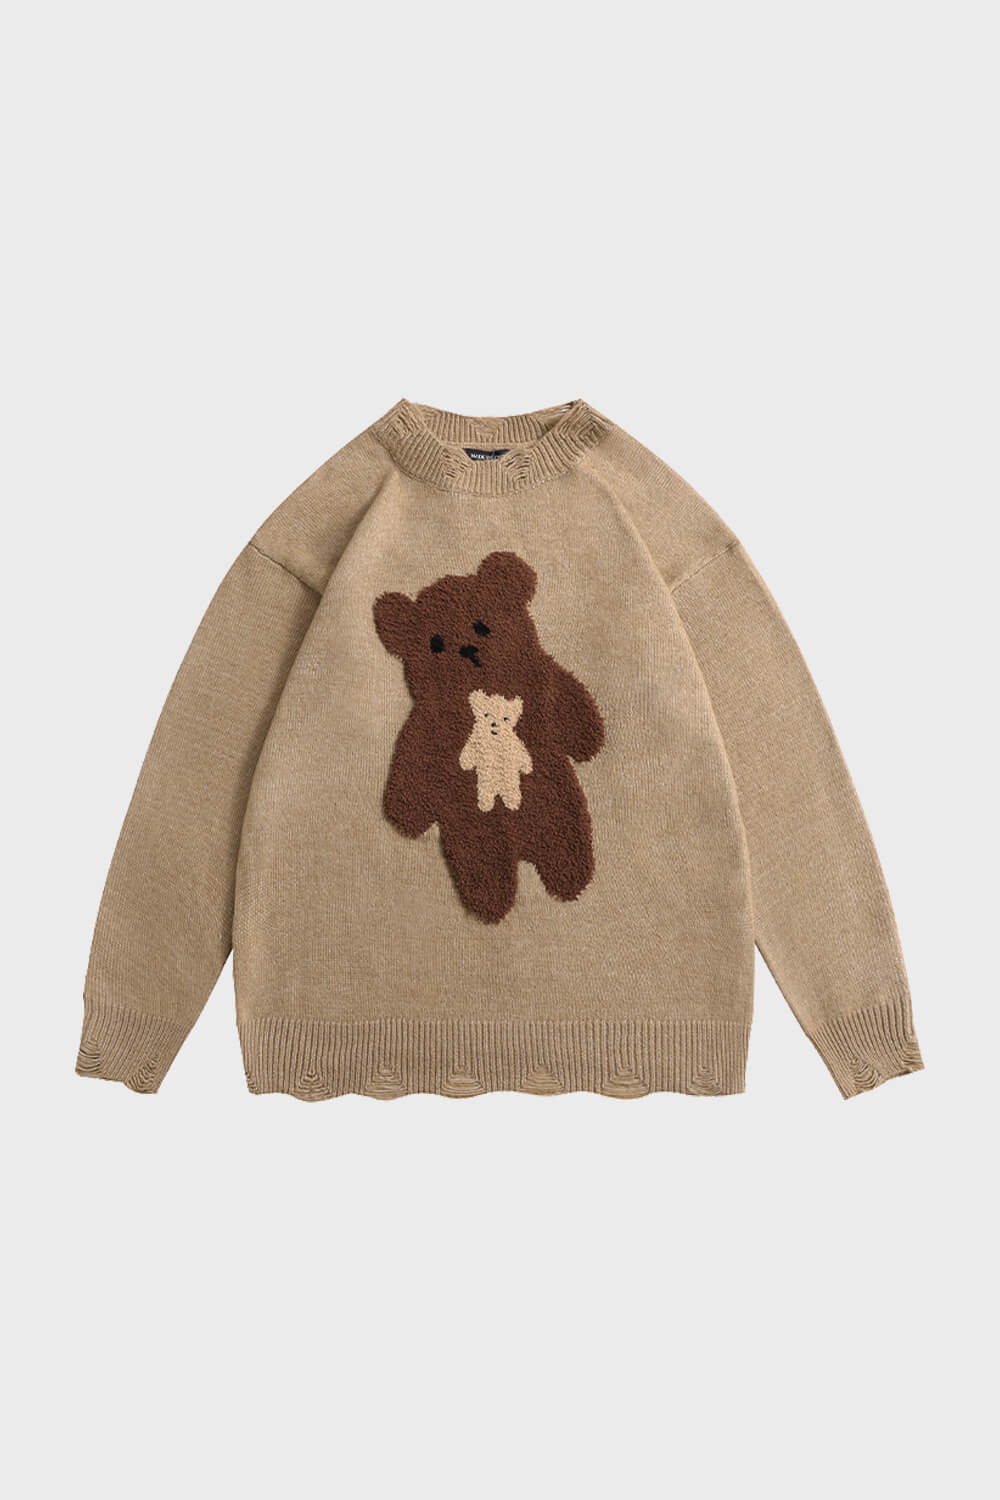 Bear Within a Bear Teddy Inception Sweater